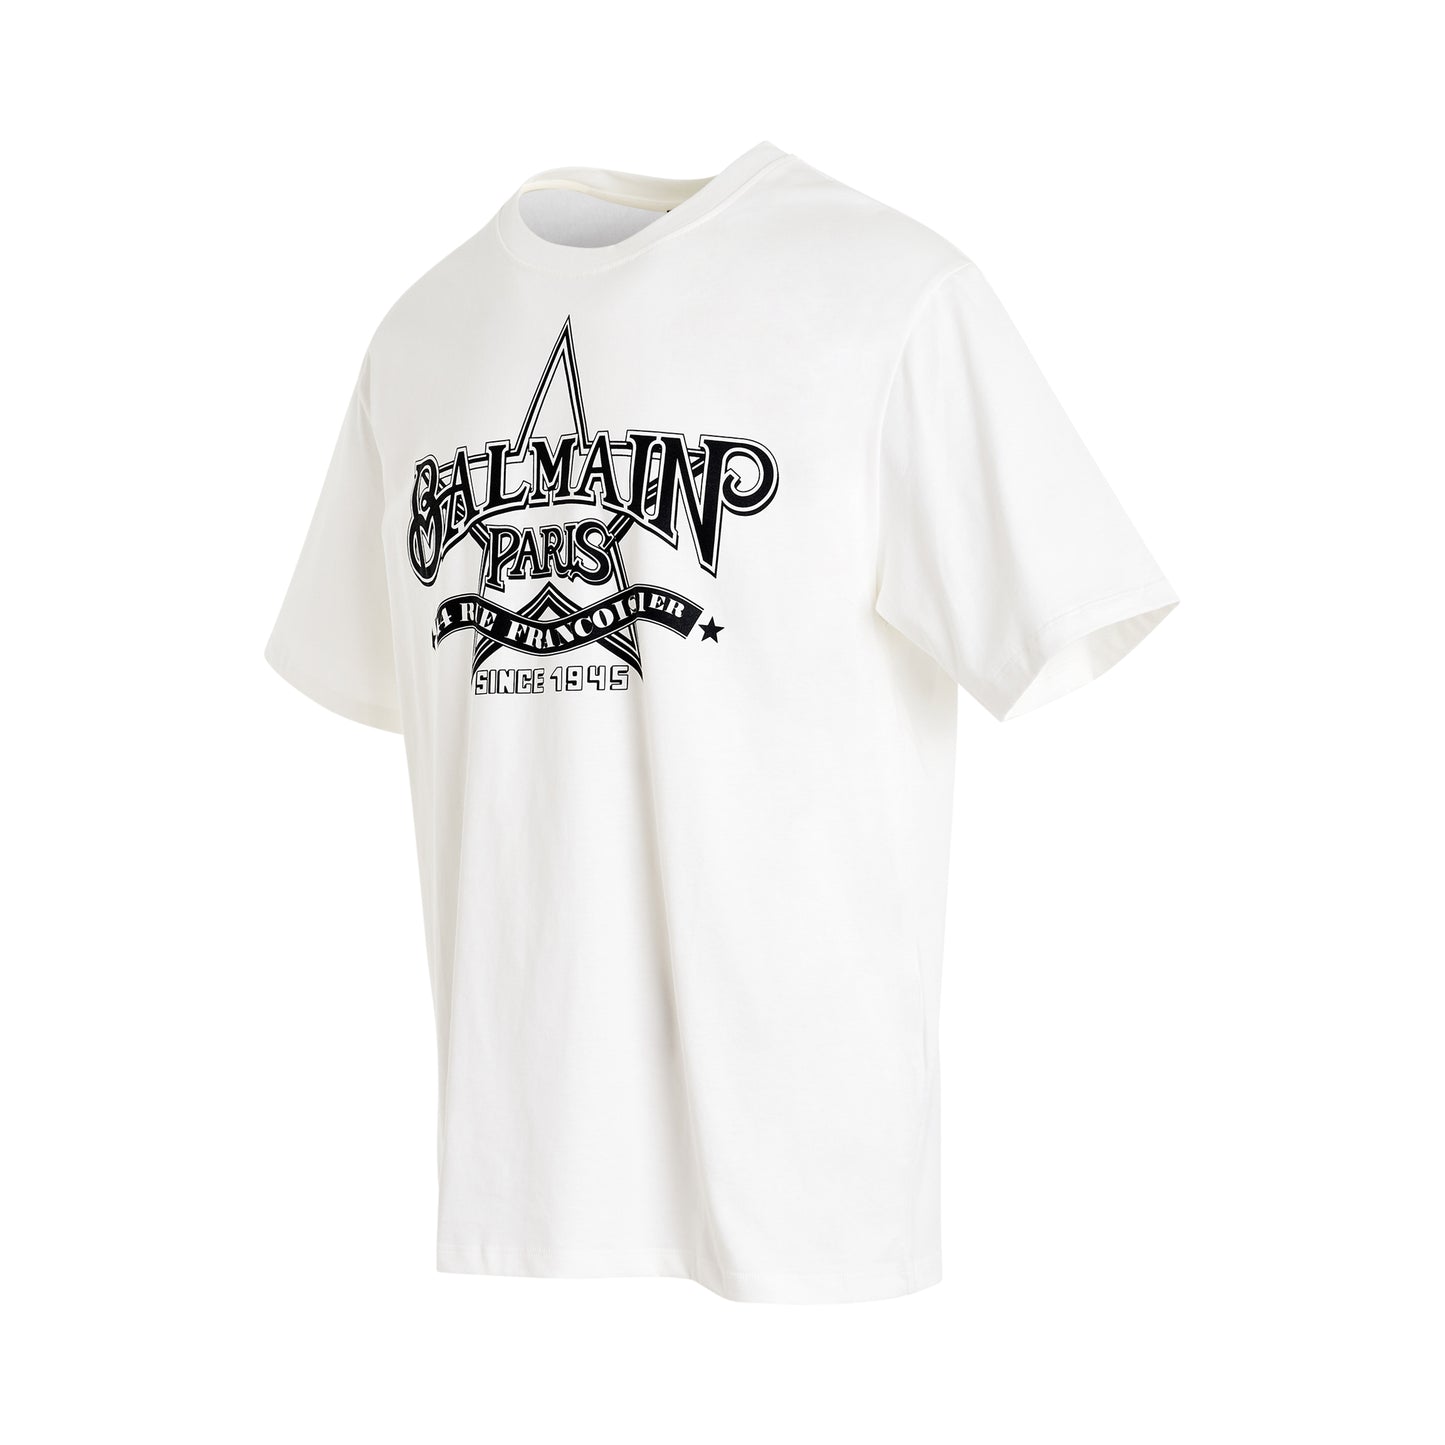 Balmain Star Print T-Shirt in White/Black